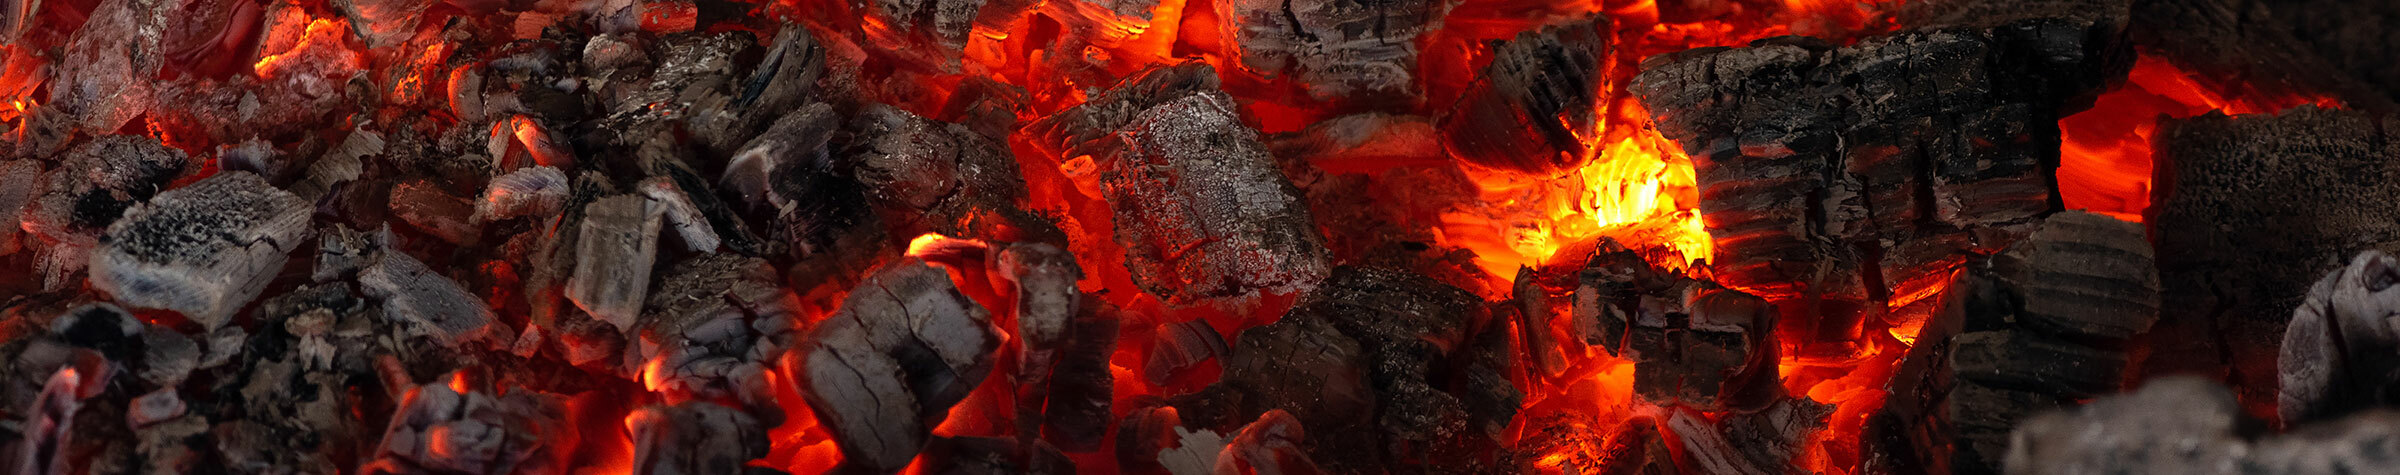 Hot coals from fire